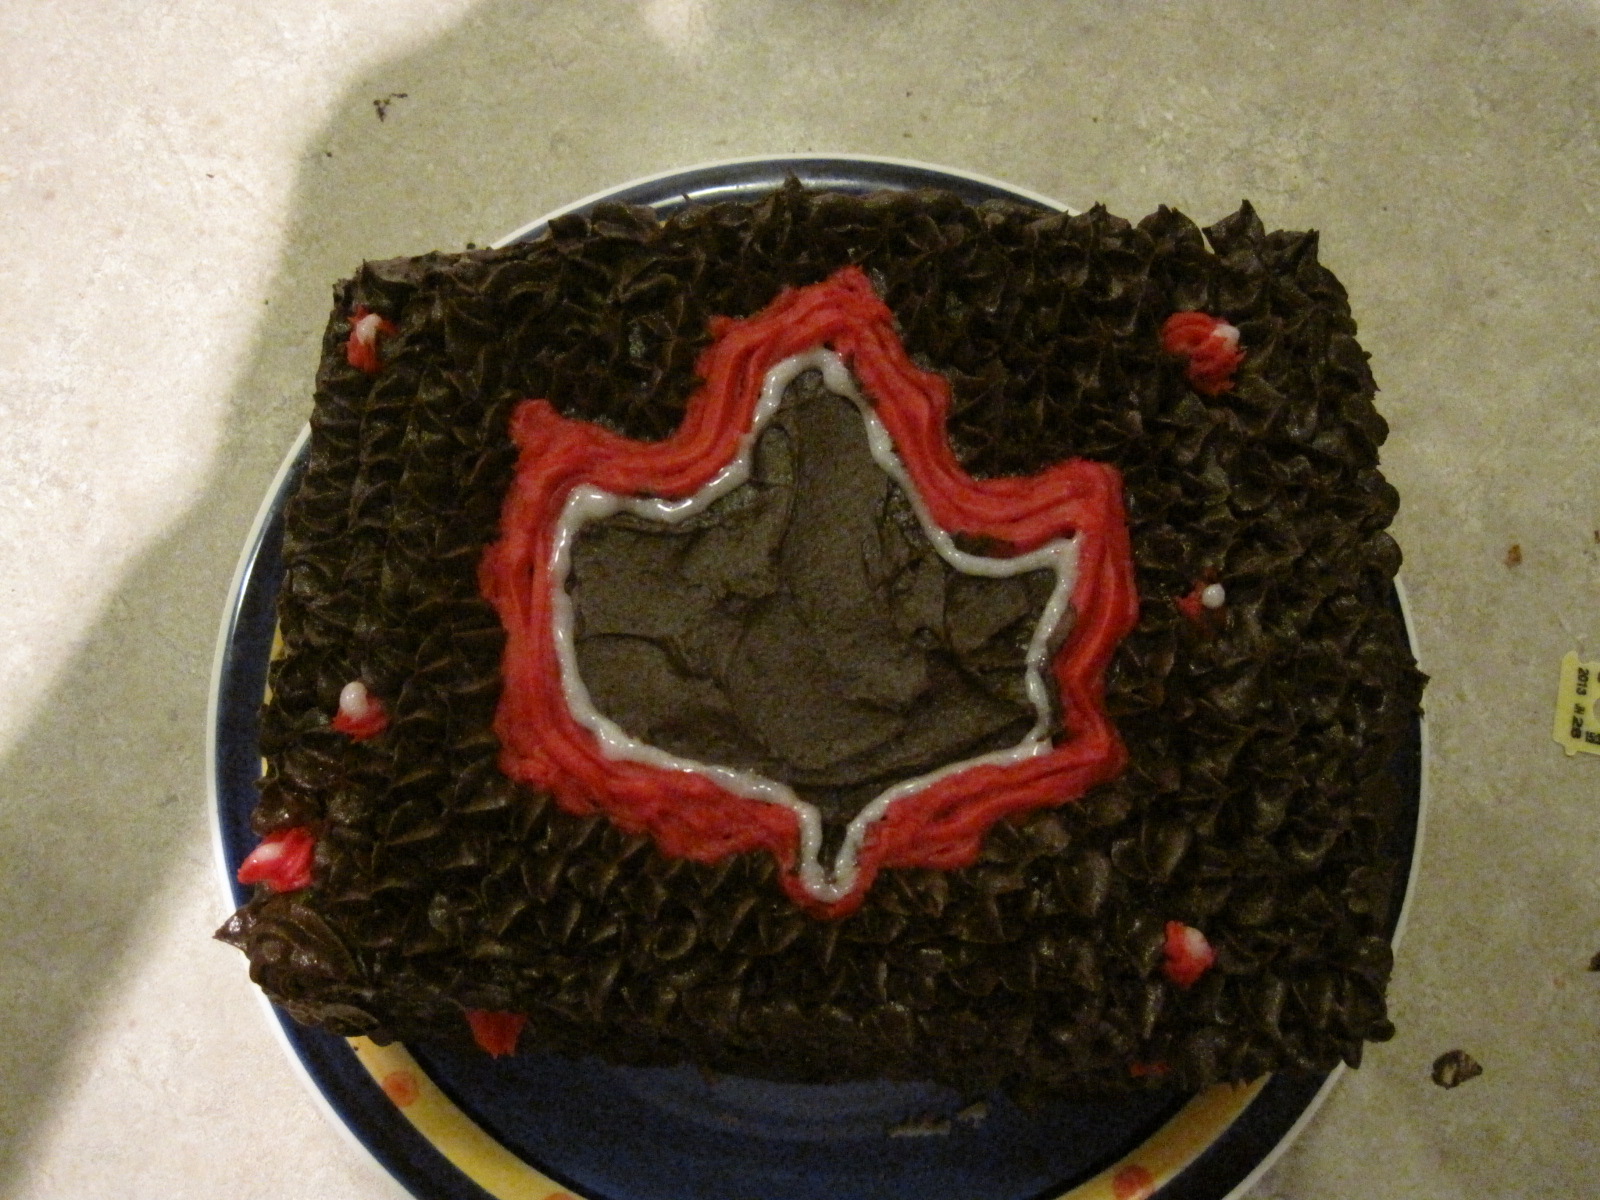 CANADA CAKE